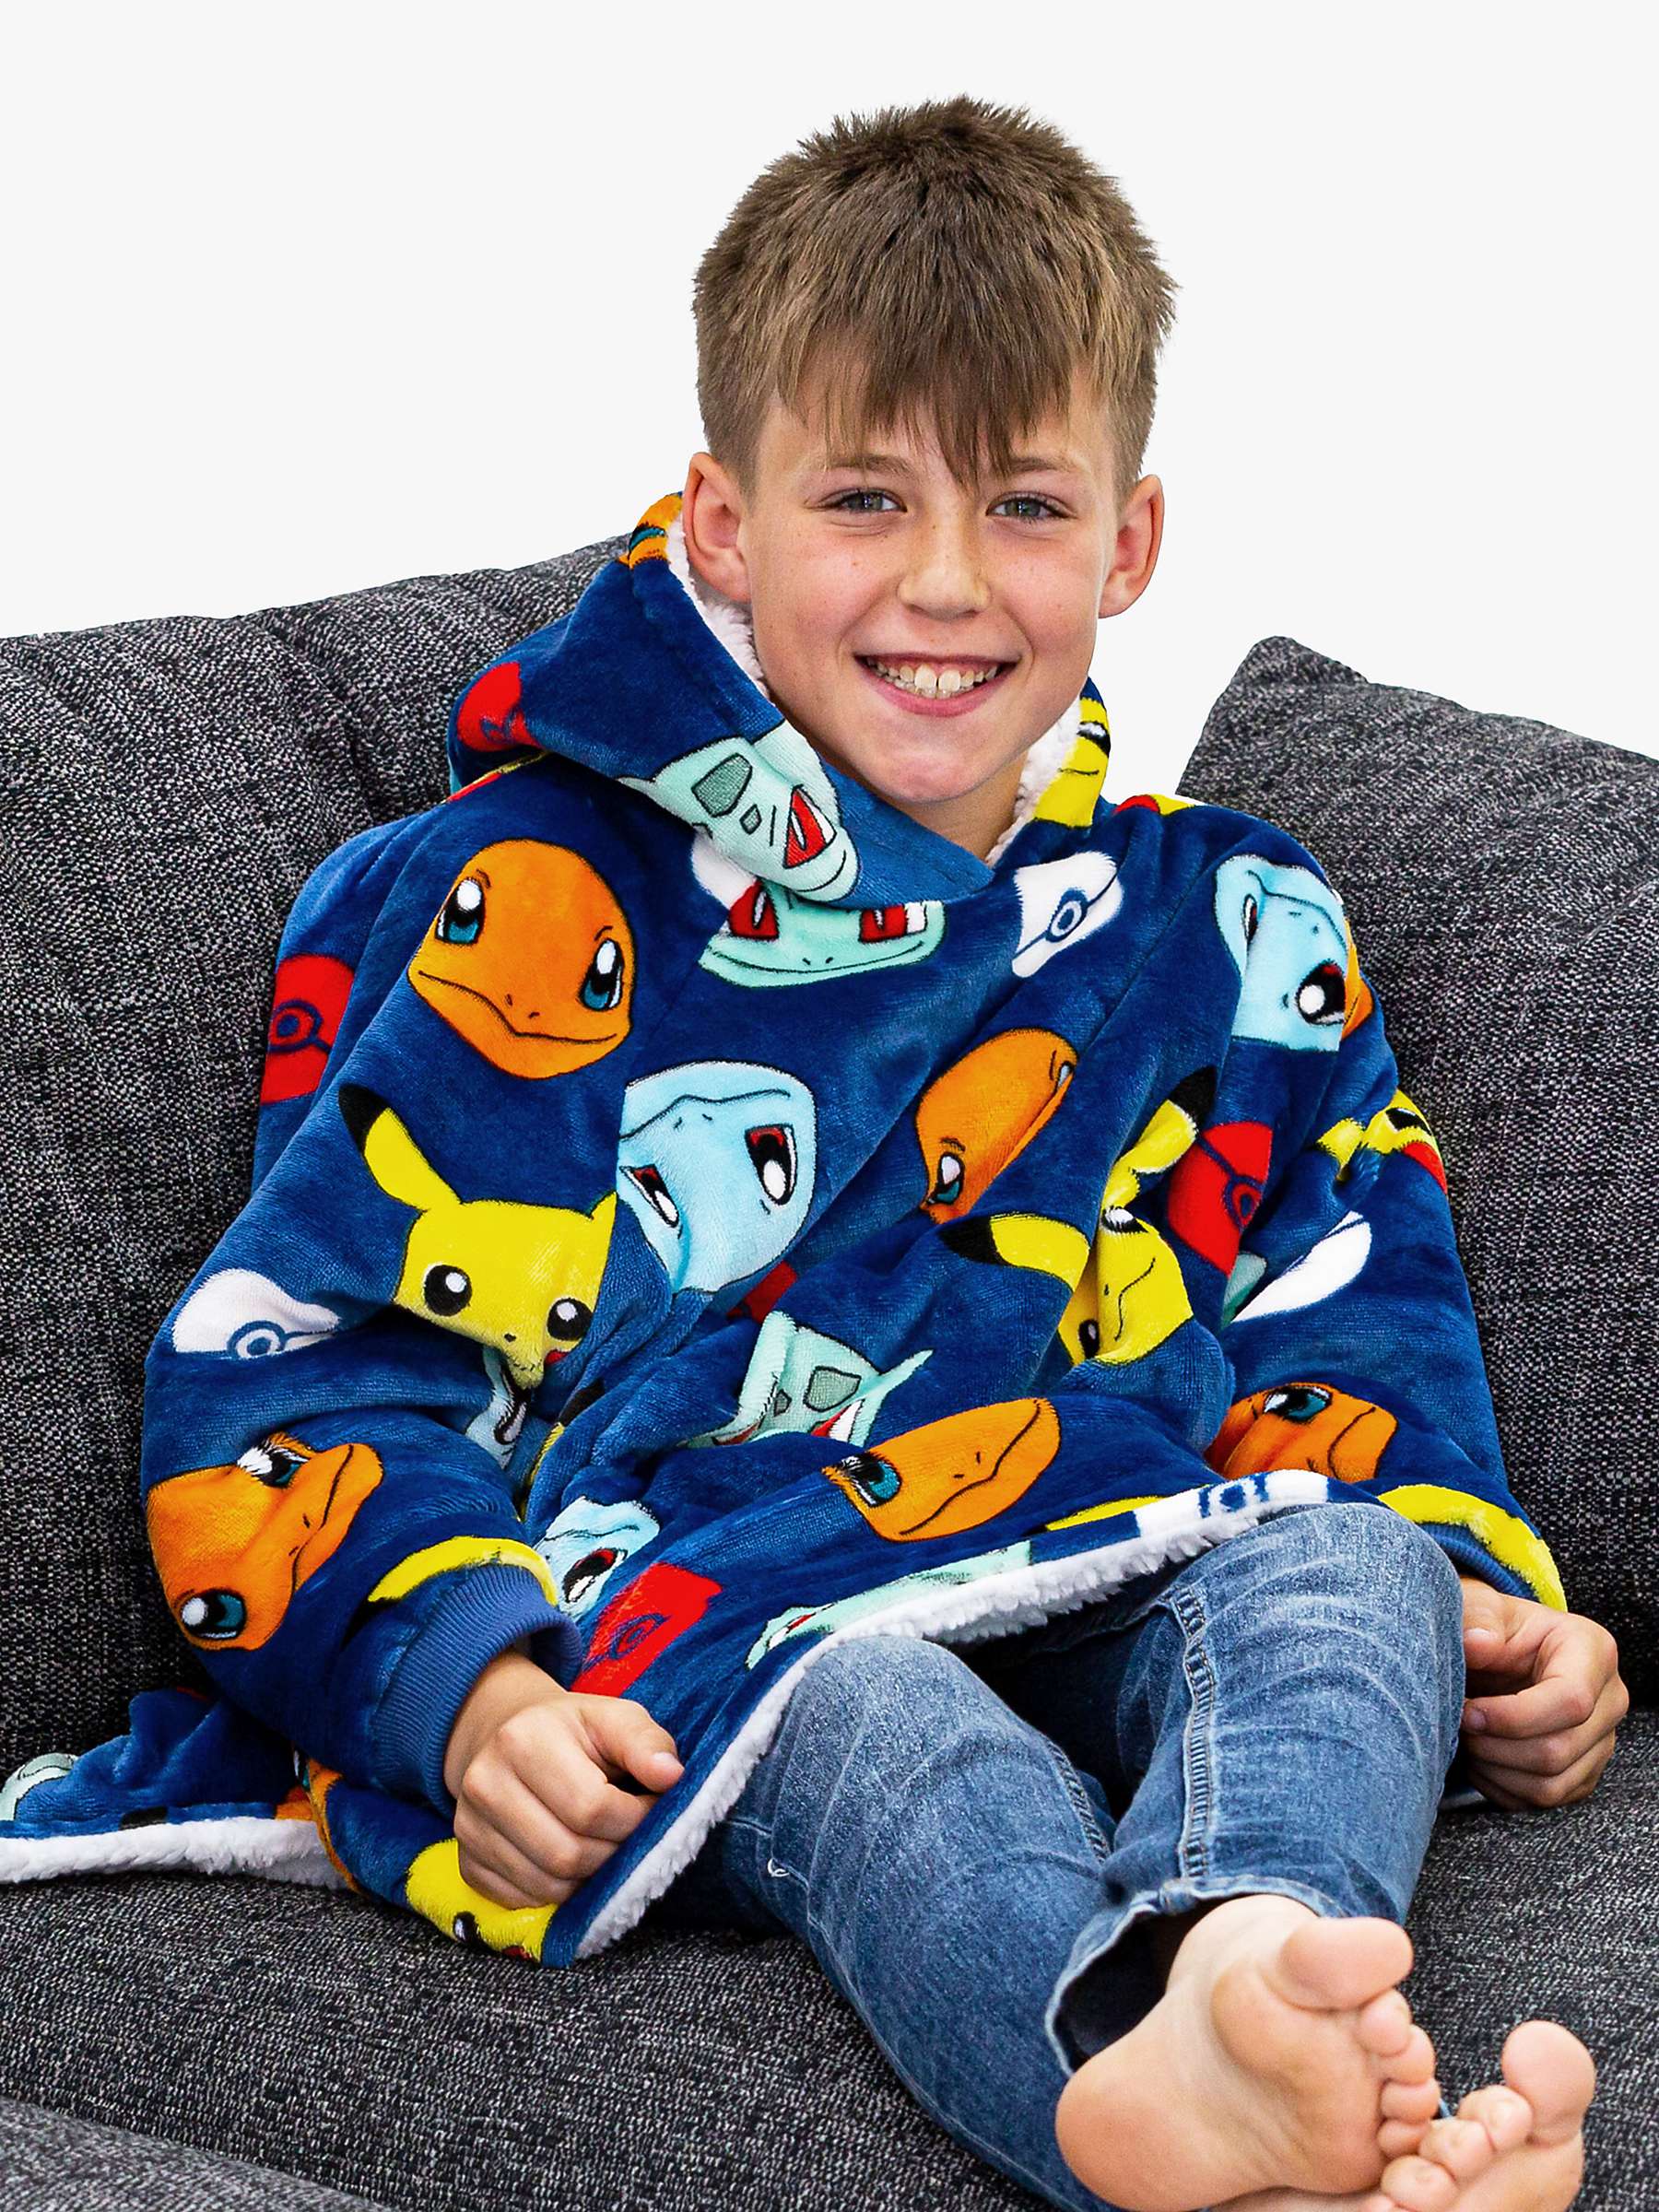 Buy Pokémon Hugzee Oversized Fleece Hooded Blanket, Blue/Multi Online at johnlewis.com